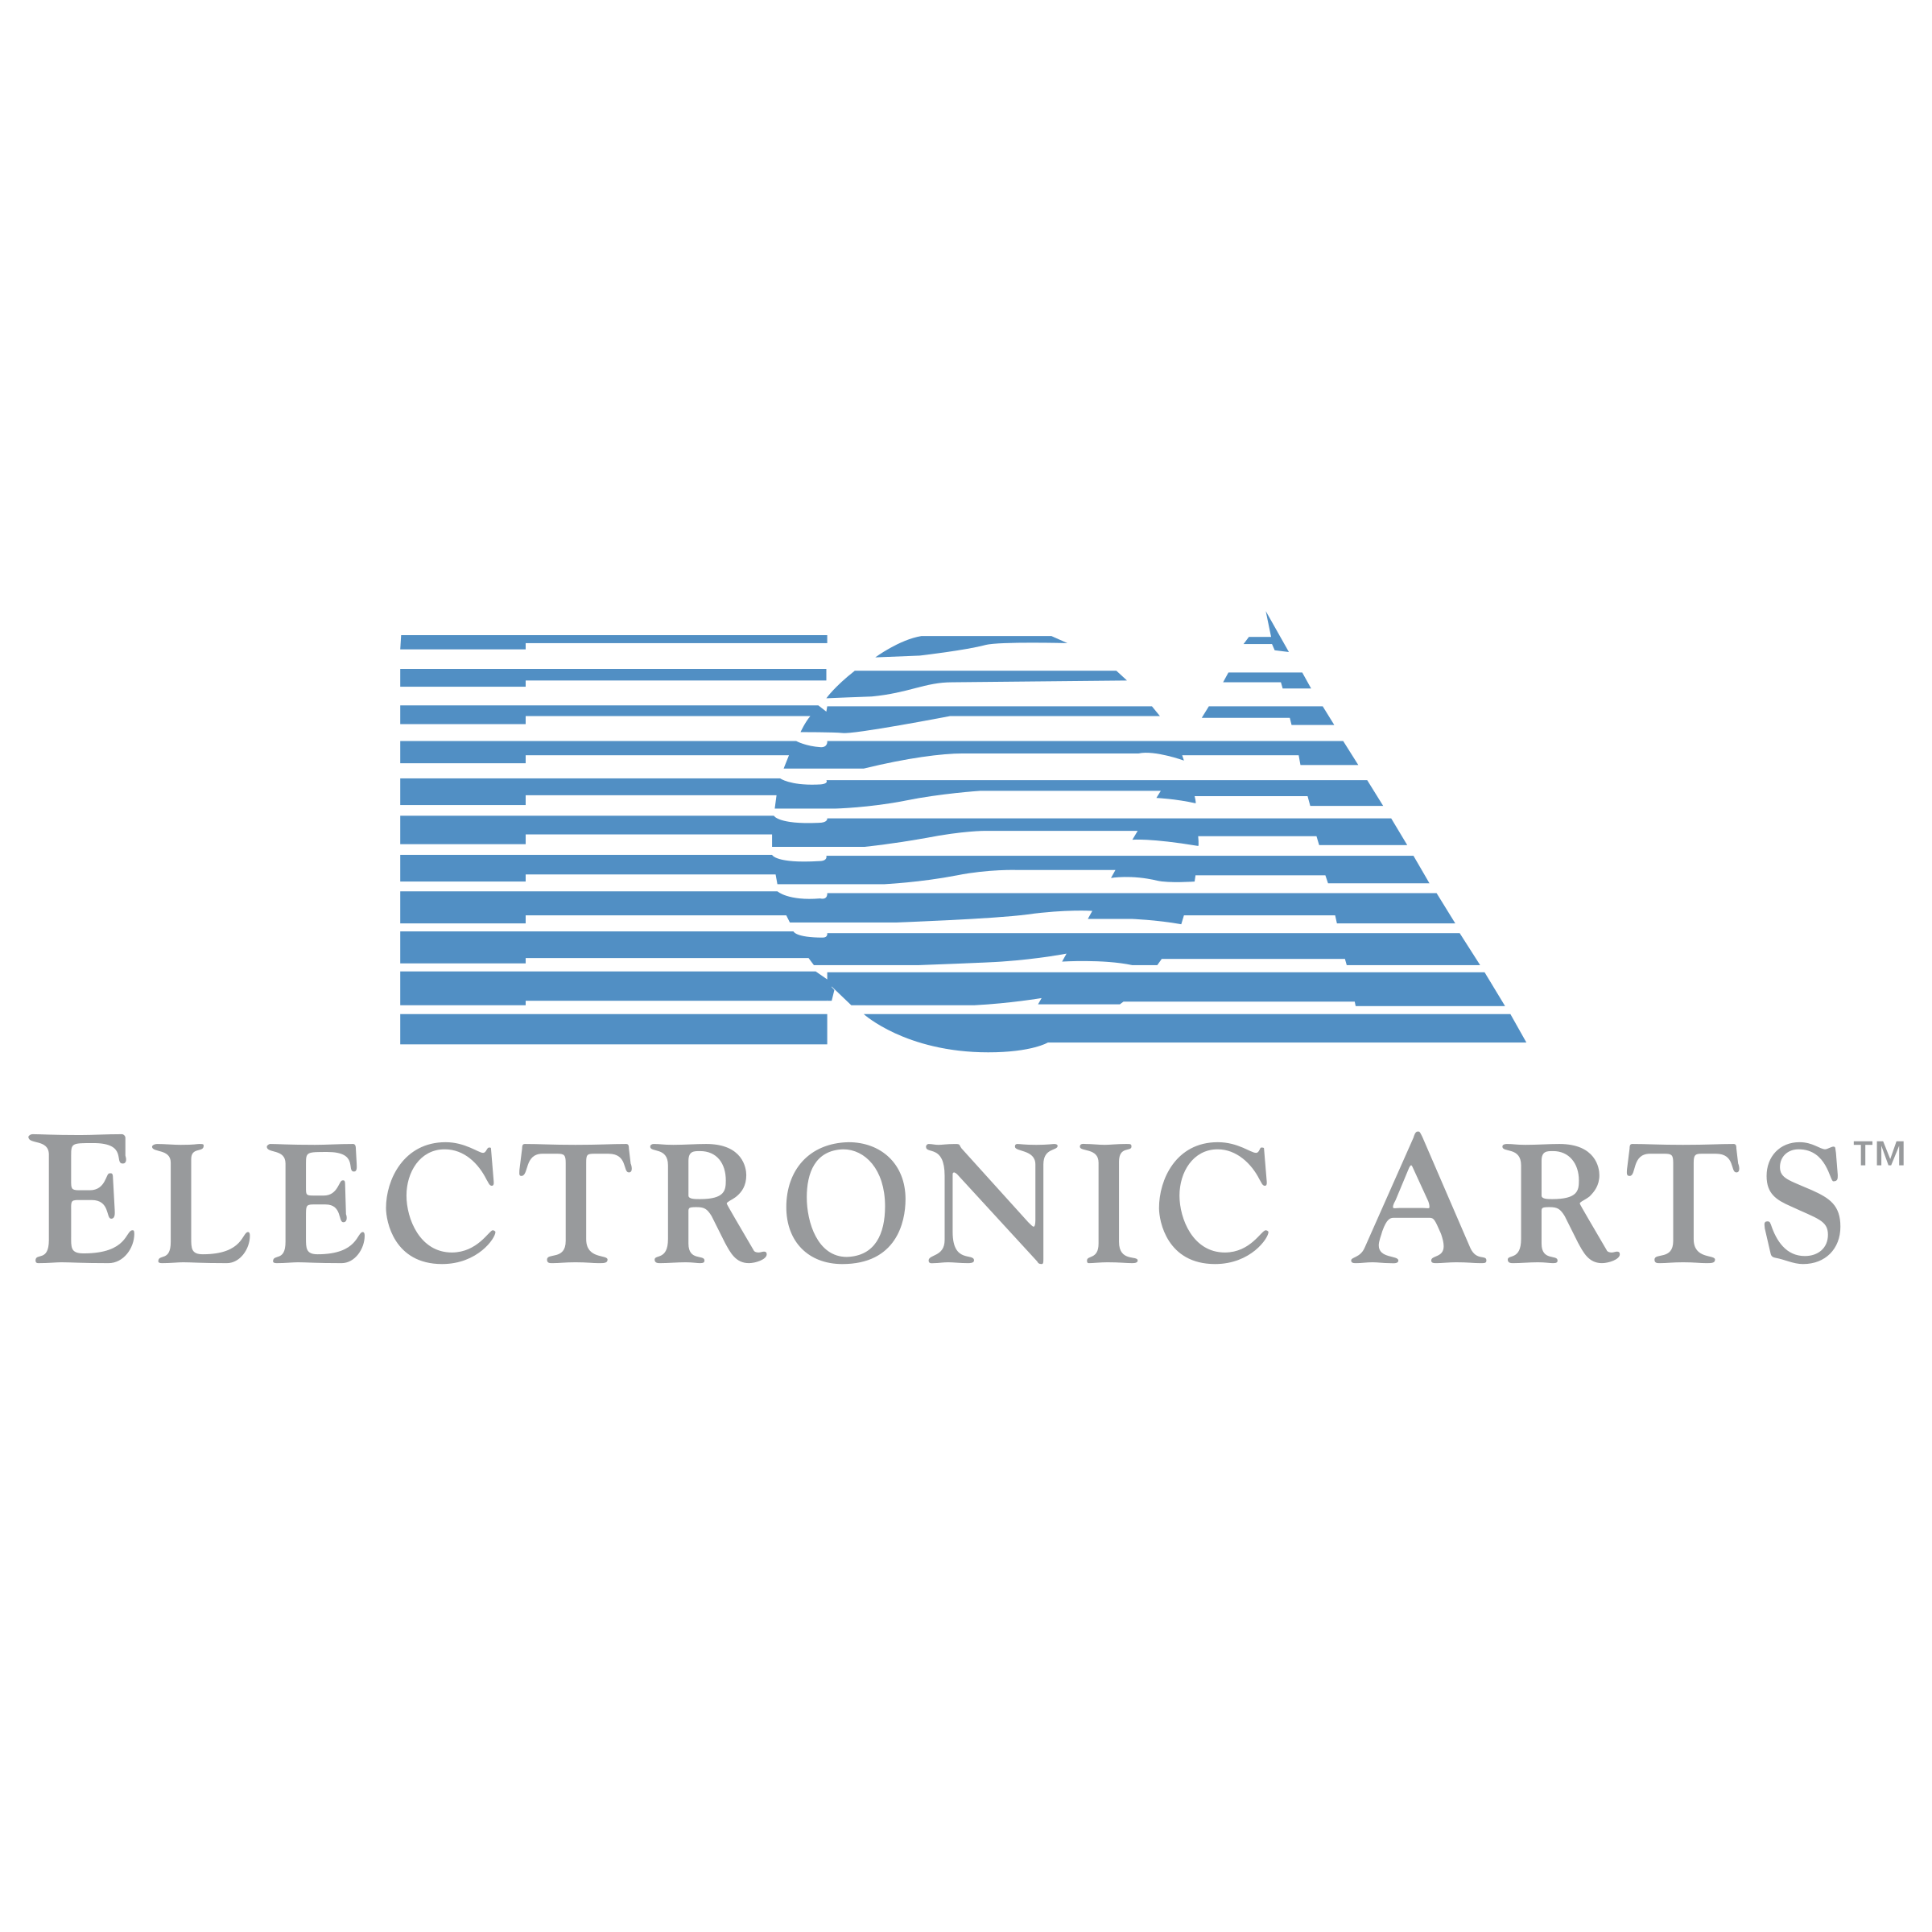 Electronic Arts Logo - Electronic Arts Logo PNG Transparent & SVG Vector - Freebie Supply